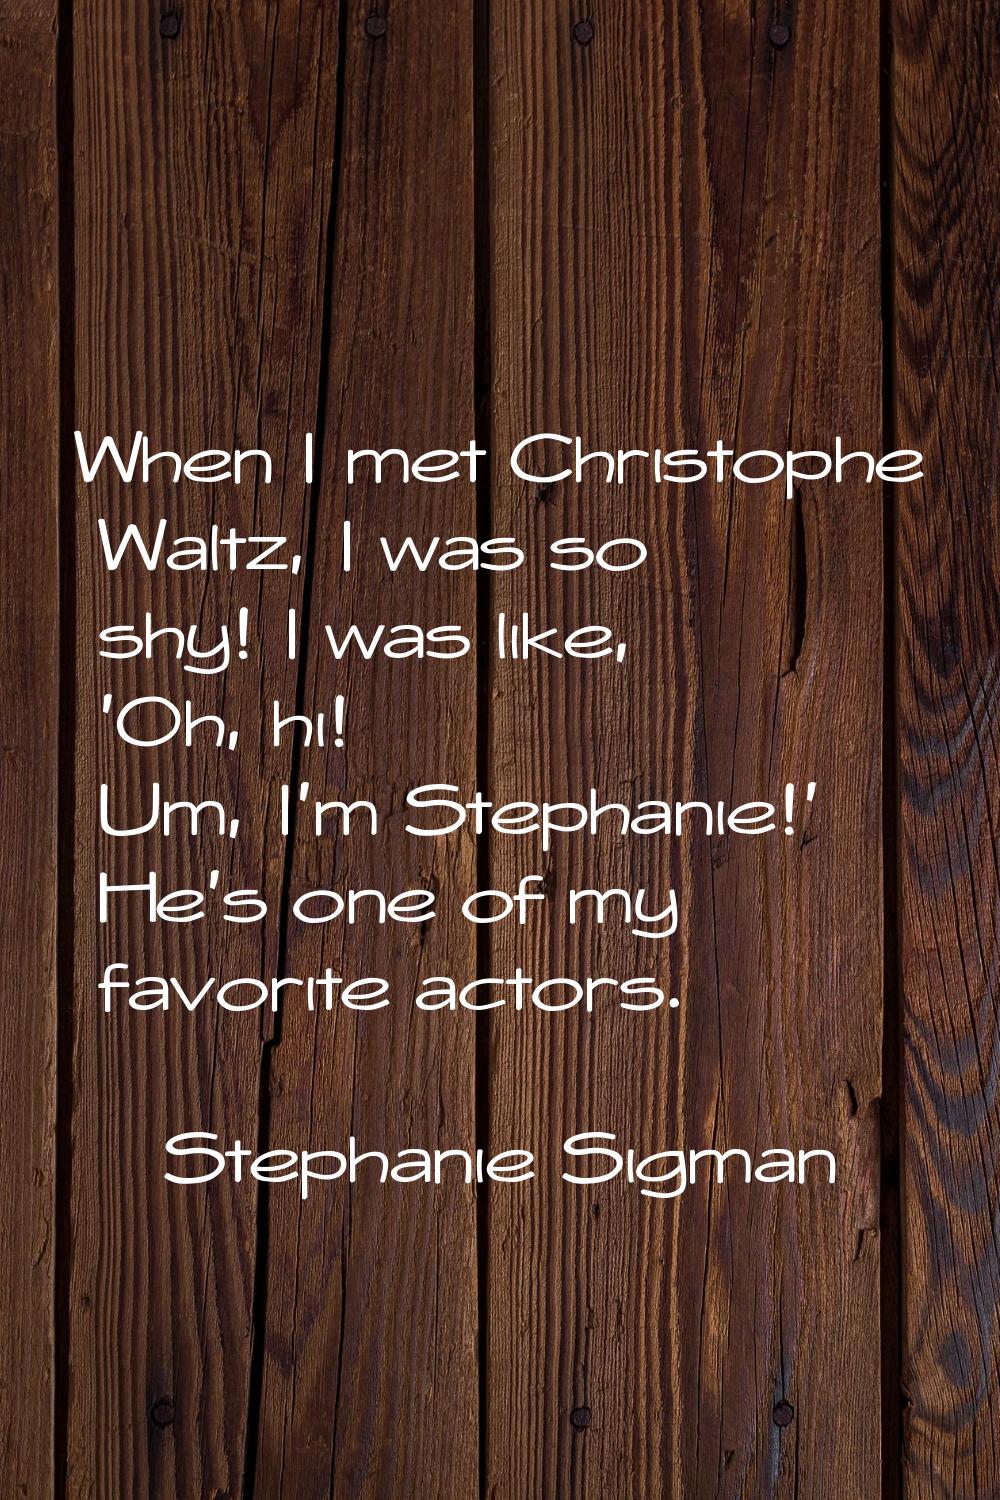 When I met Christophe Waltz, I was so shy! I was like, 'Oh, hi! Um, I'm Stephanie!' He's one of my 